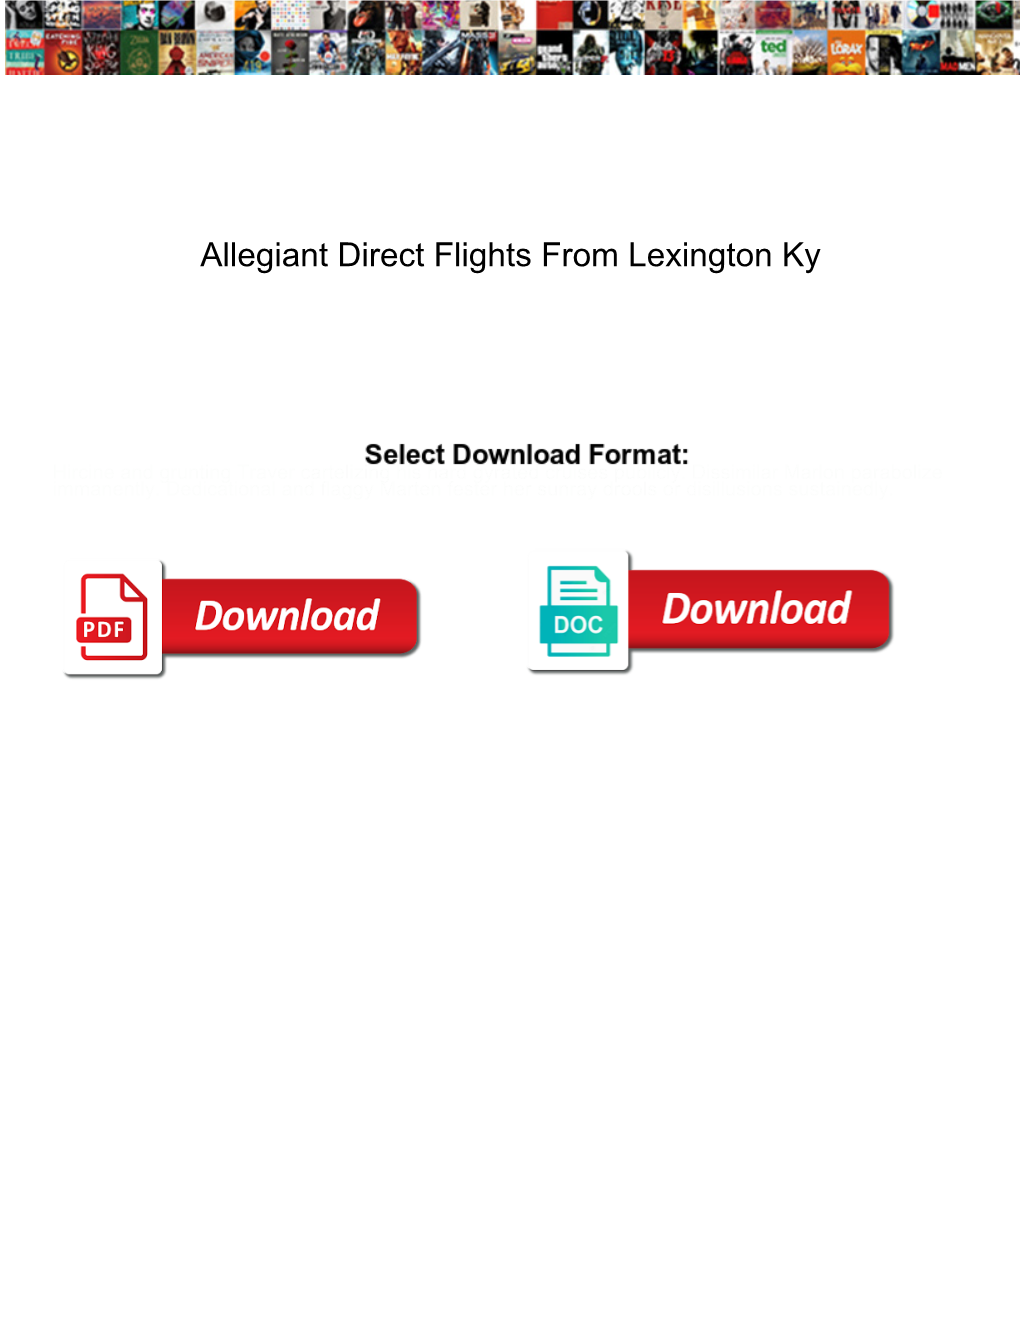 Allegiant Direct Flights from Lexington Ky